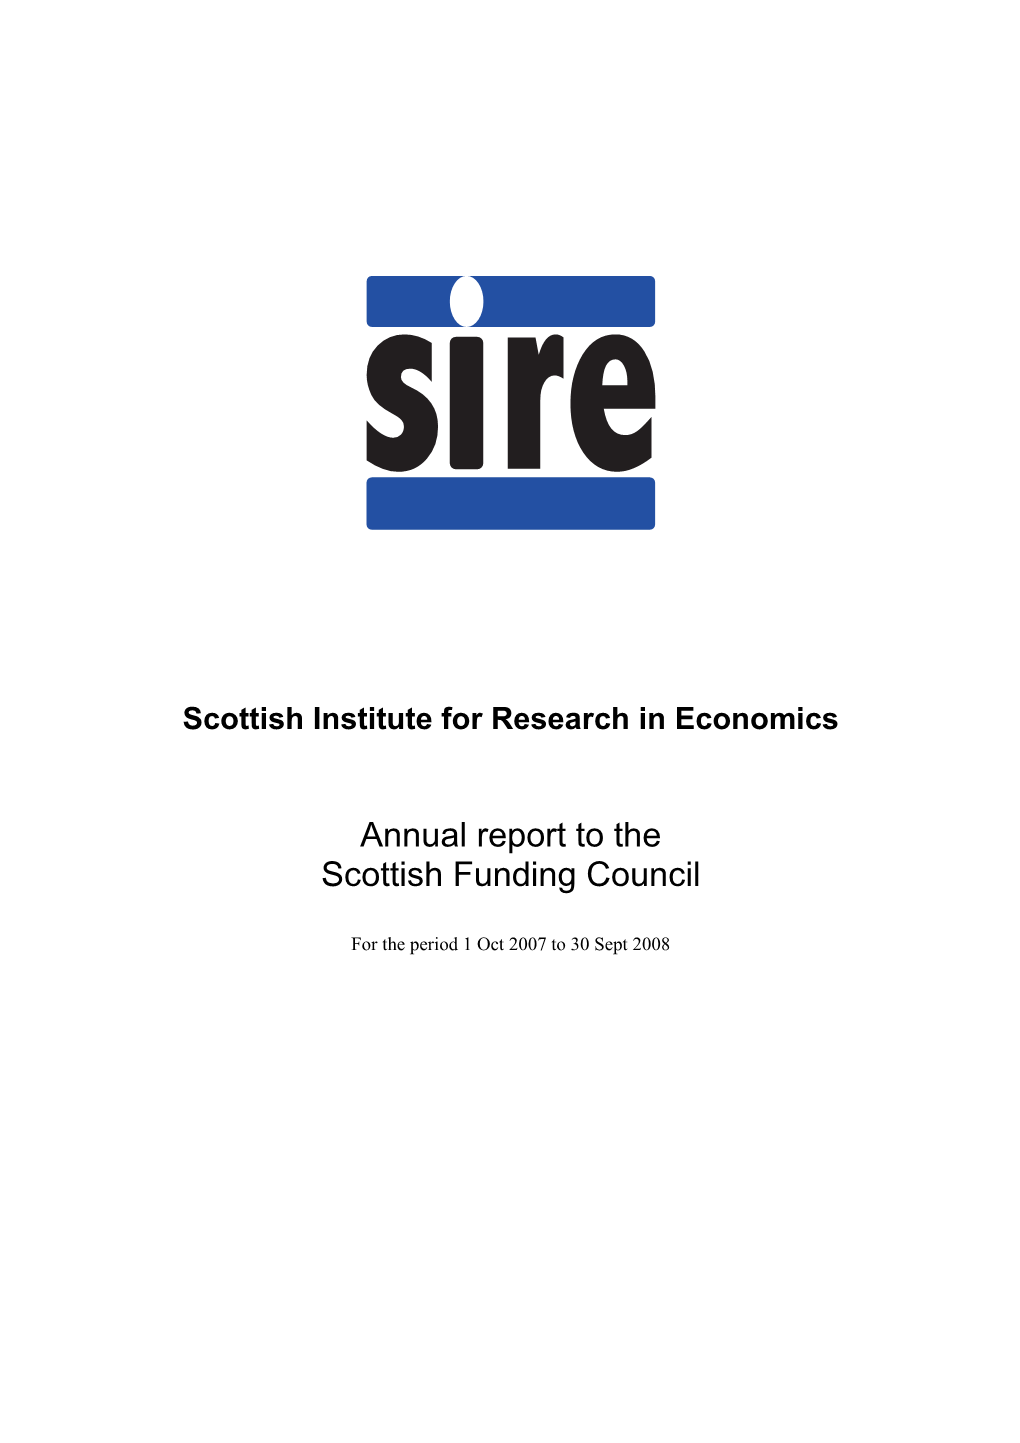 SIRE Report 2 (Oct 2007-Sept 2008)